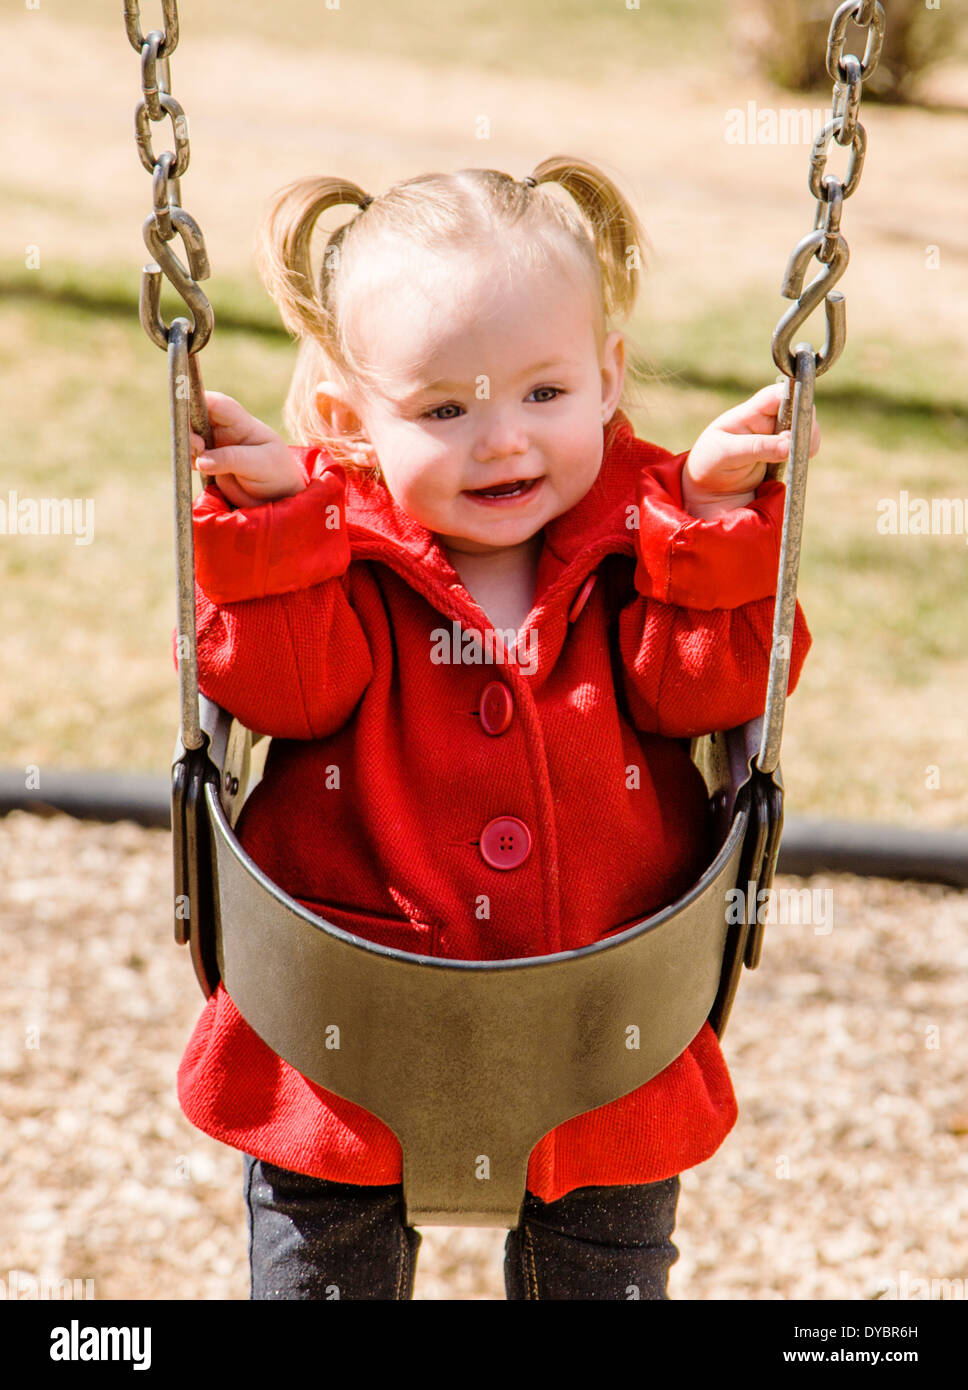 Carino, adorabile 16 mese bambina basculante in un parco giochi per bambini Foto Stock